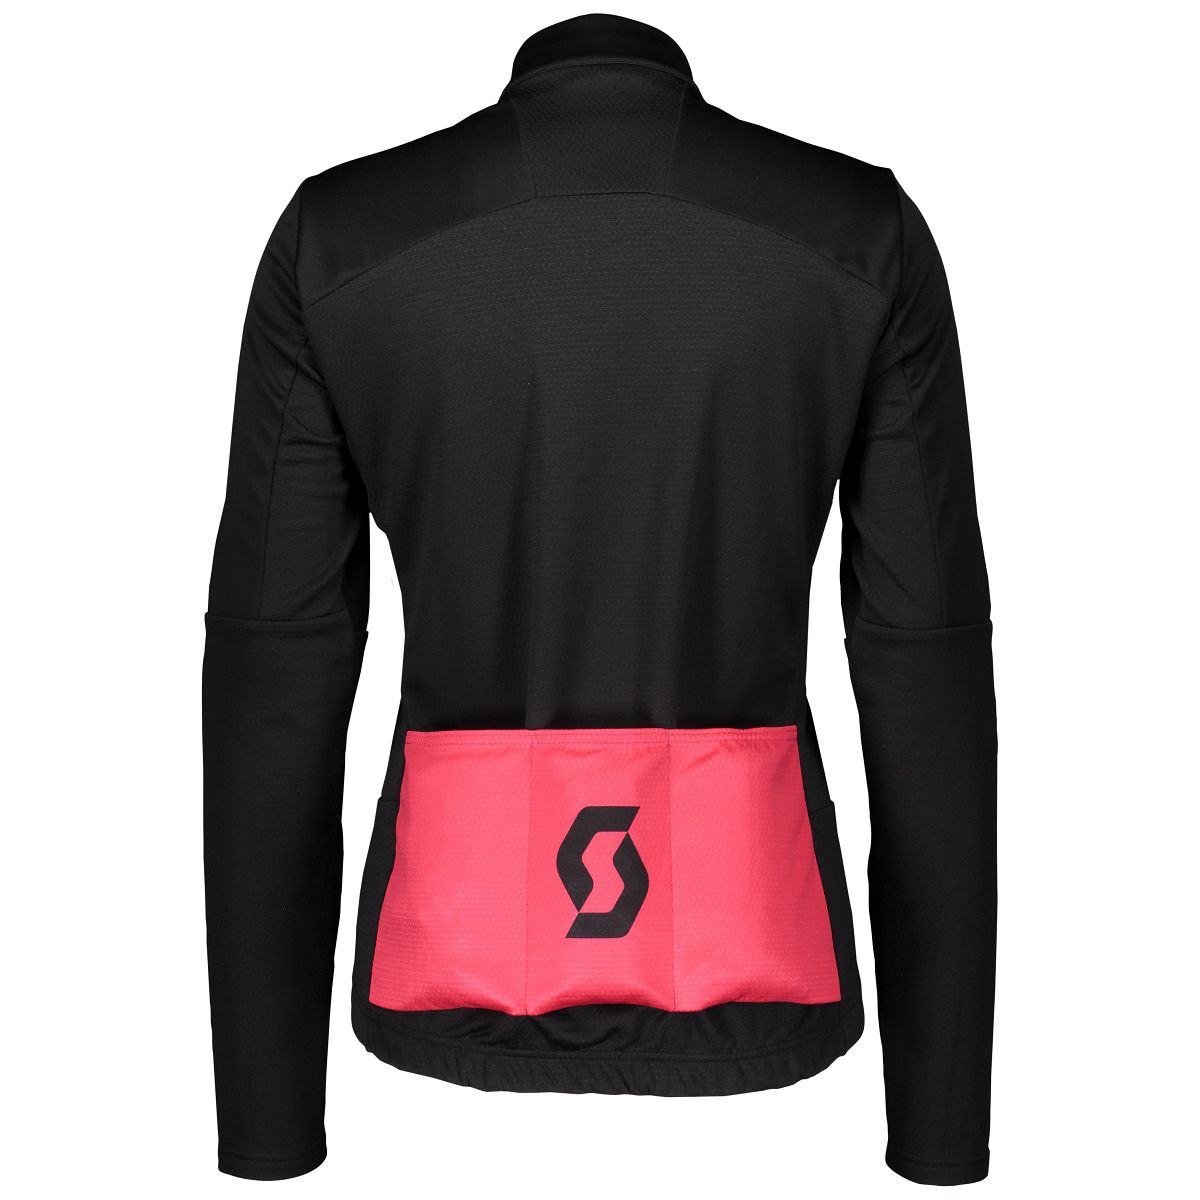 Scott RC Warm Hybrid WB Damen Winter Fahrrad Jacke schwarz/pink 2020 